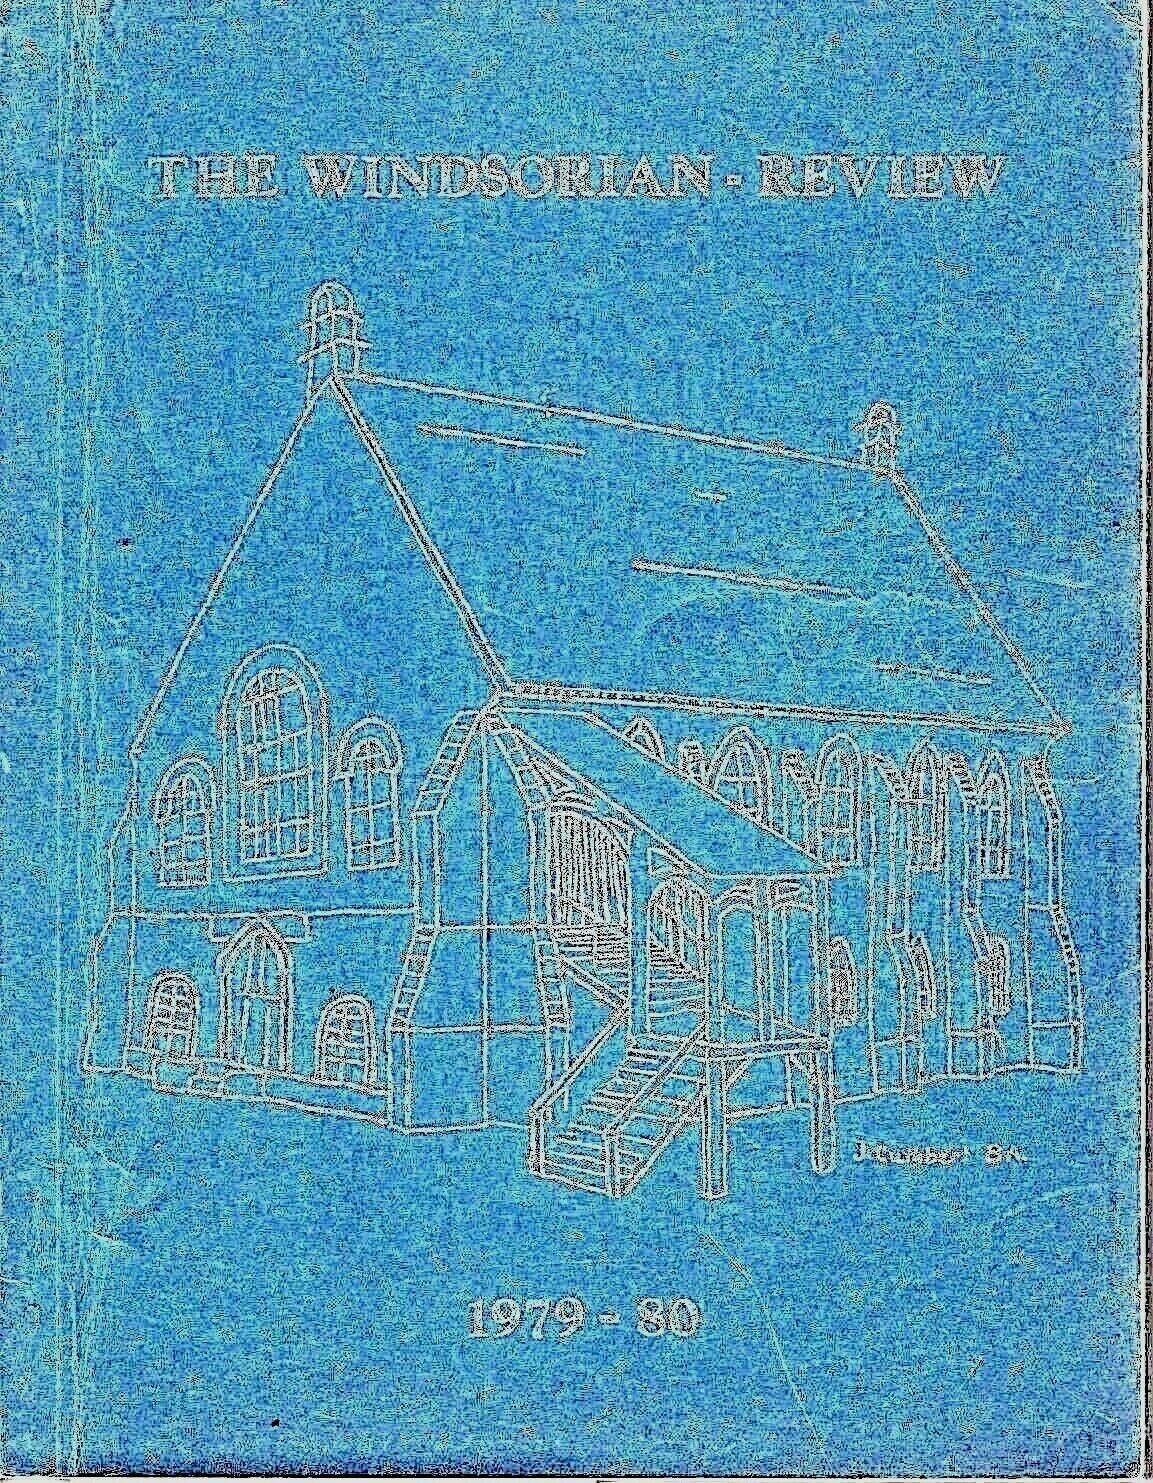 Original-1979-80 Windsorian Review Yearbook-King's-Edgehill-Windsor NS